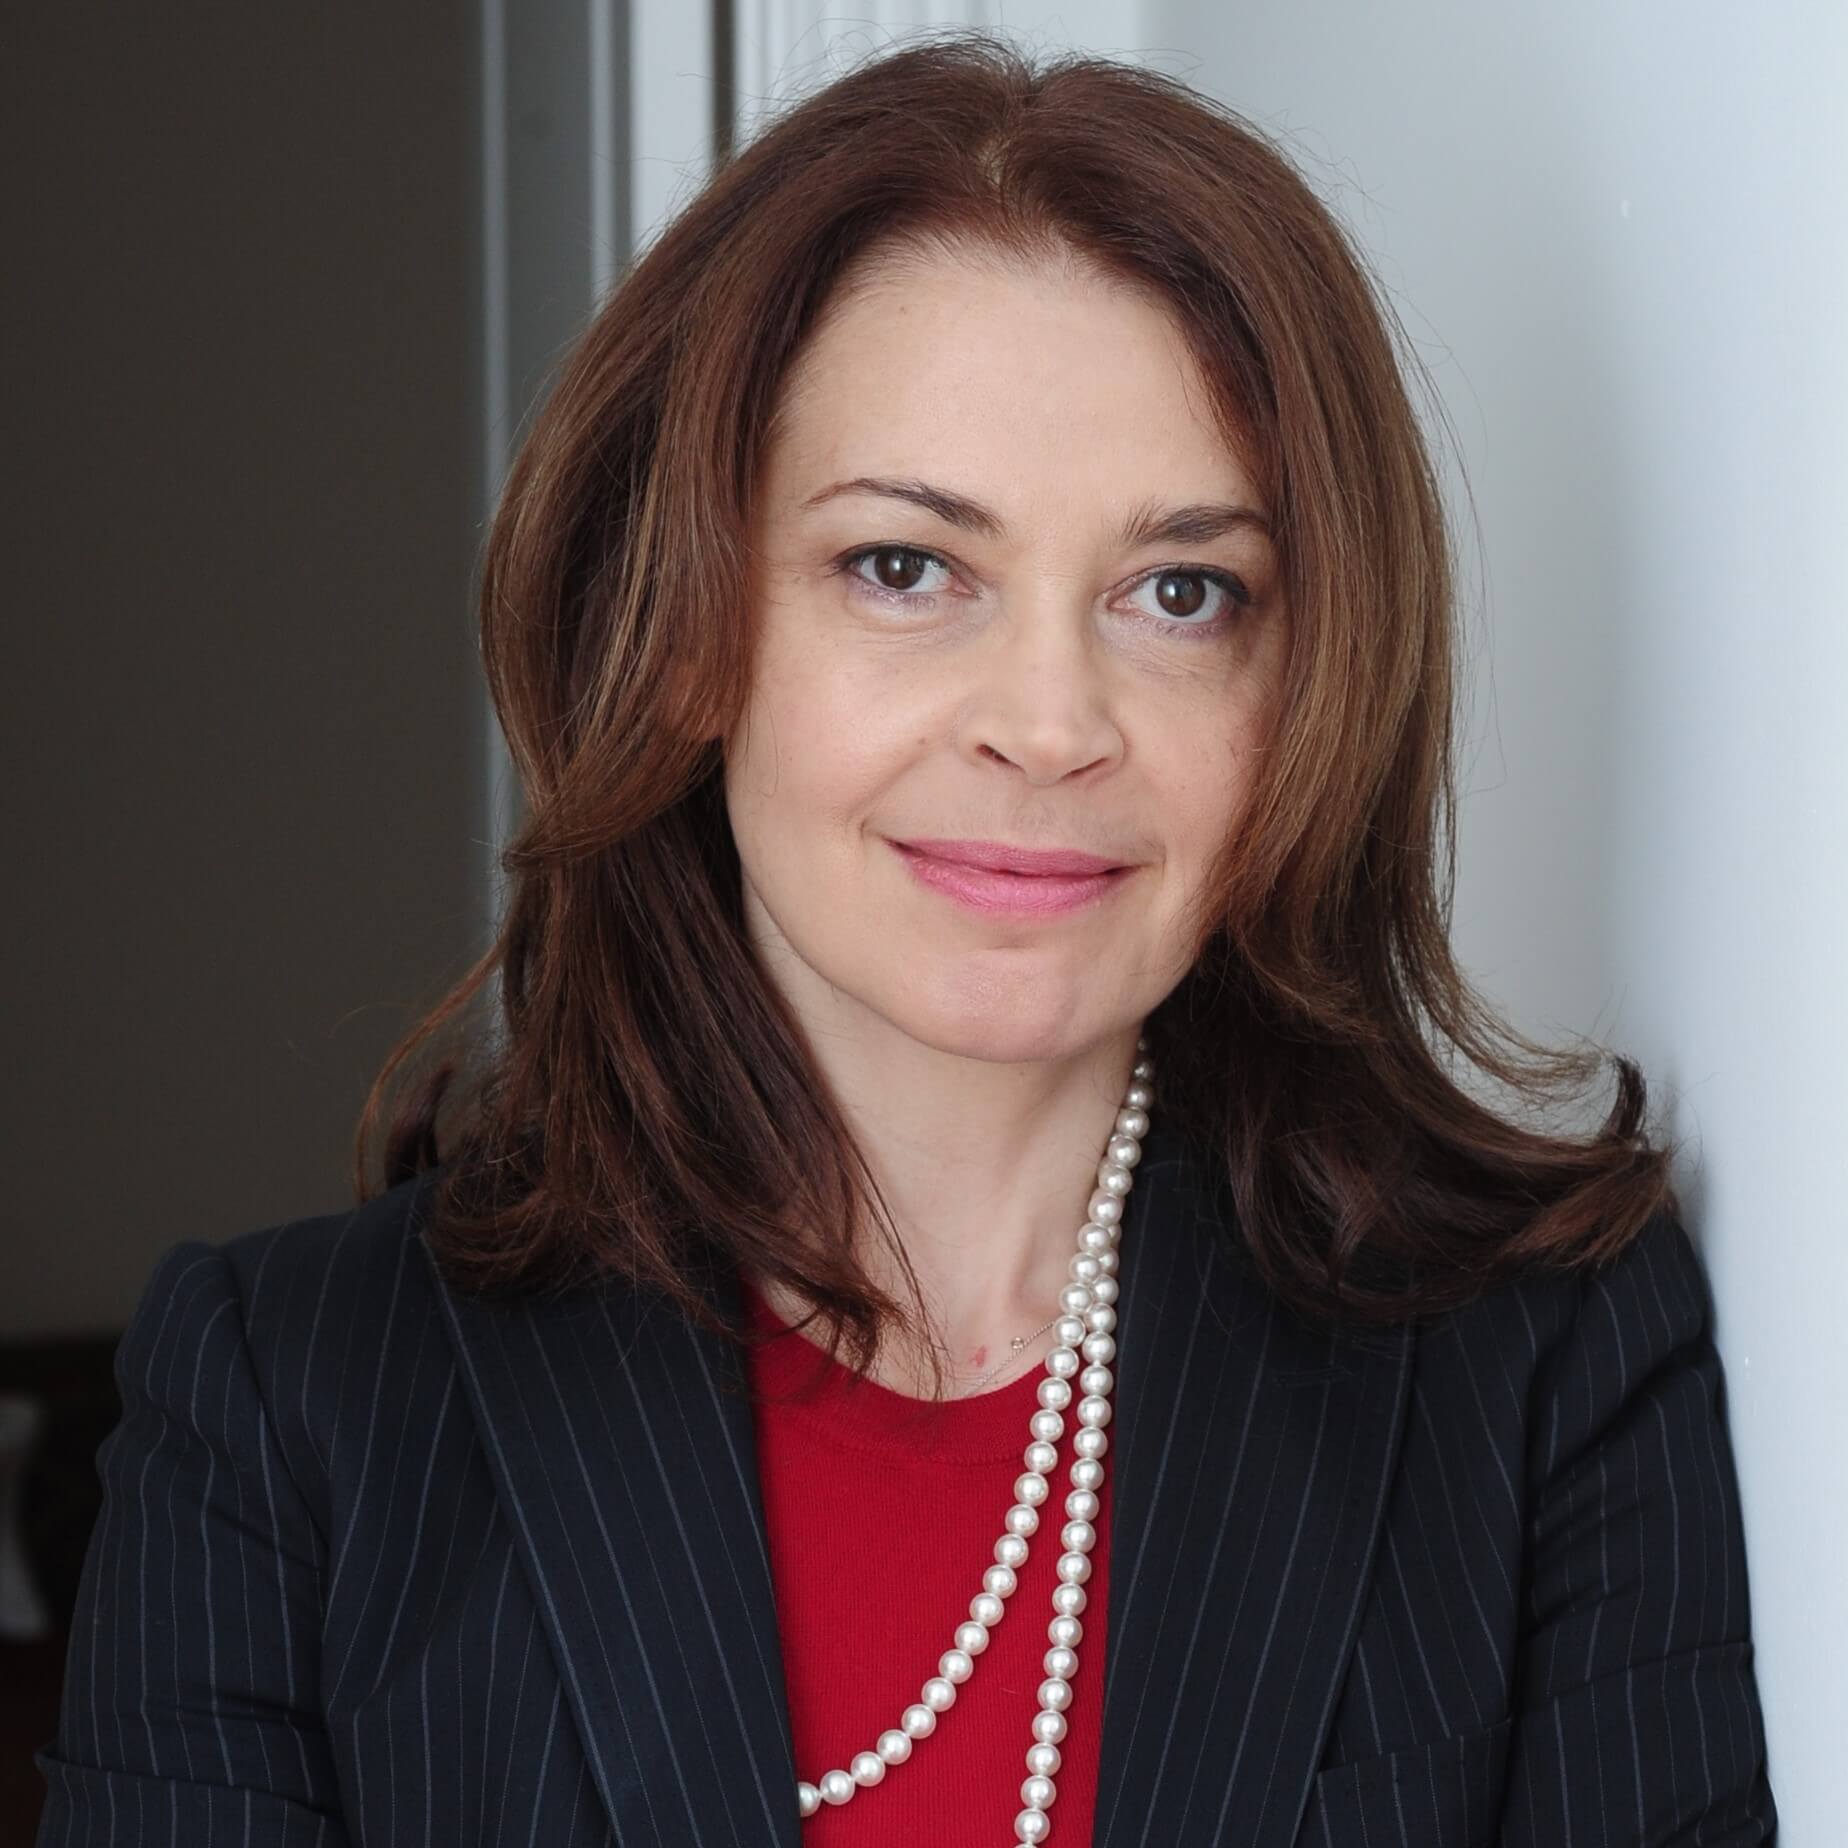 Female Personal Injury Lawyer in Houston Texas - Nejd Jill Yaziji